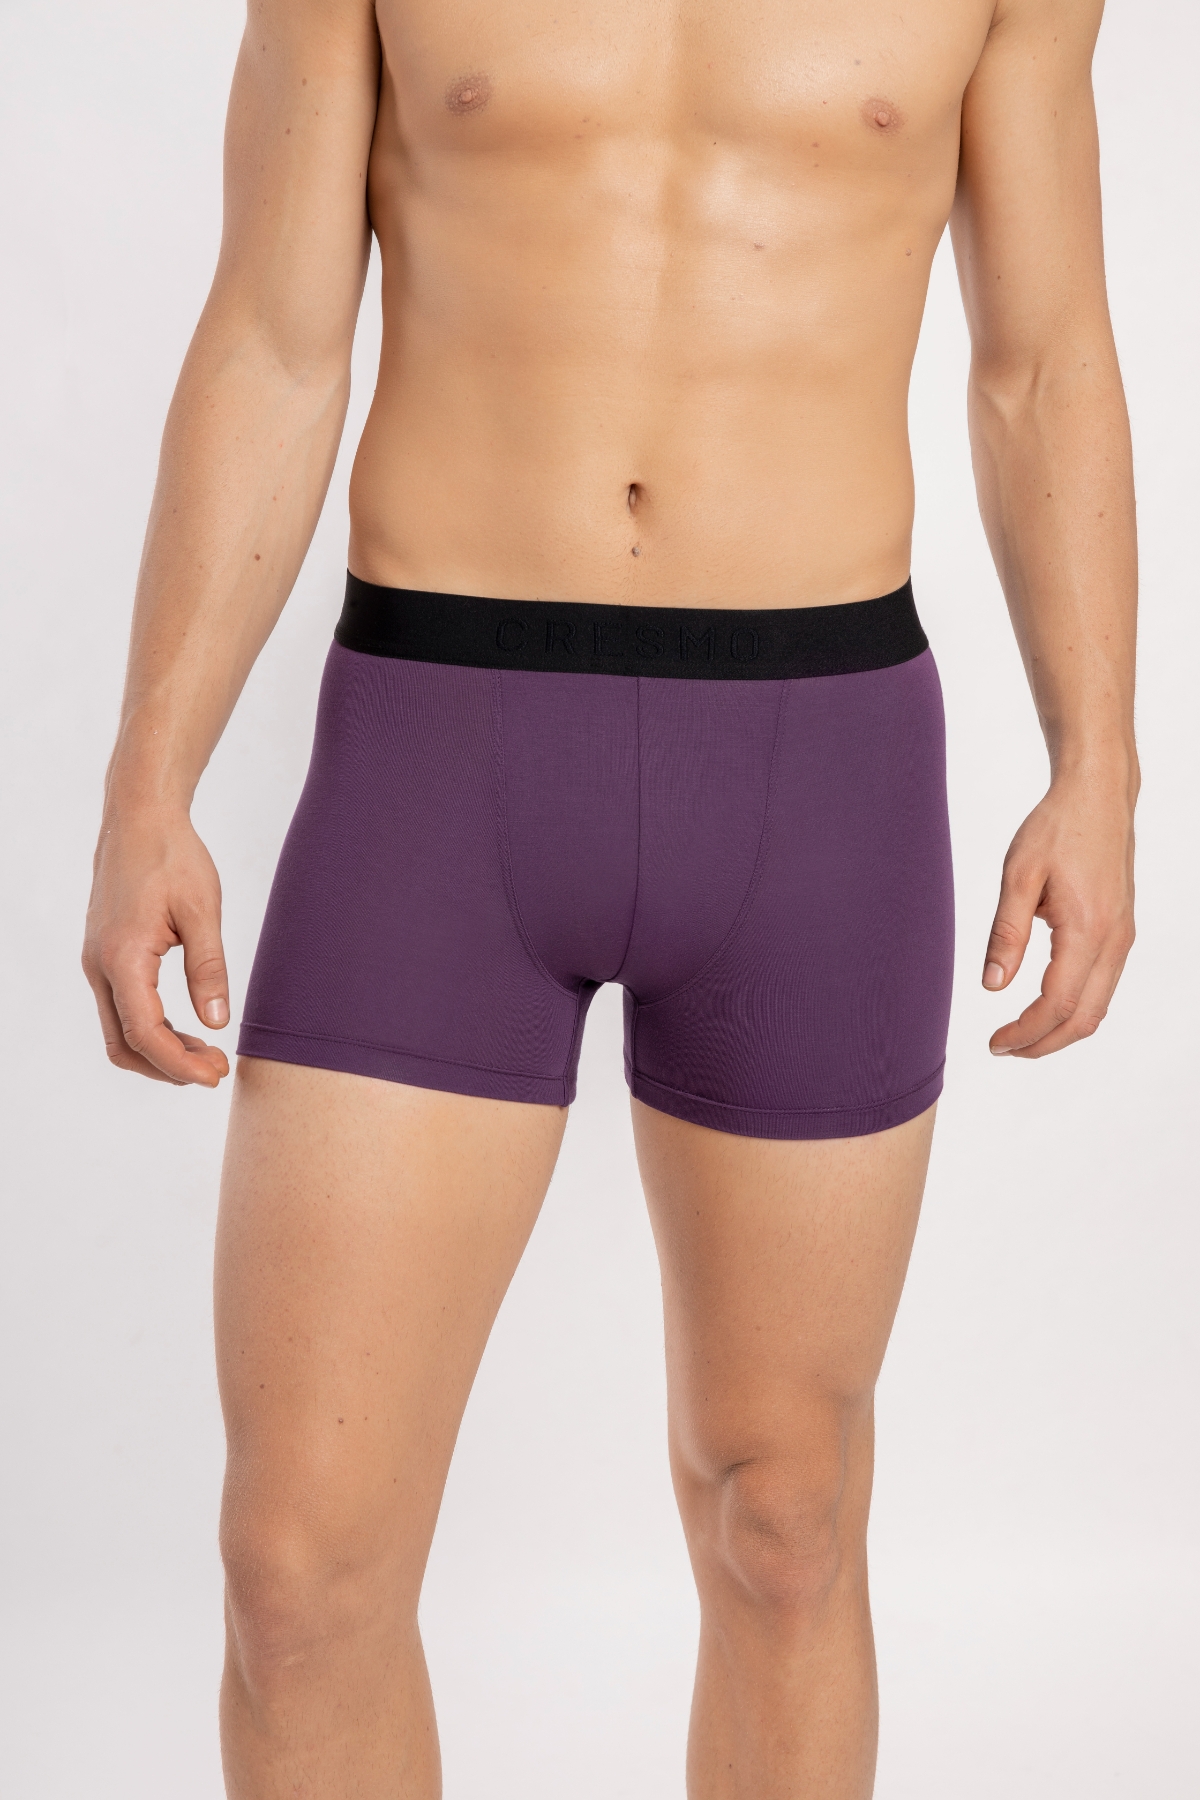 CRESMO Men's Anti-Microbial Micro Modal Underwear Breathable Ultra